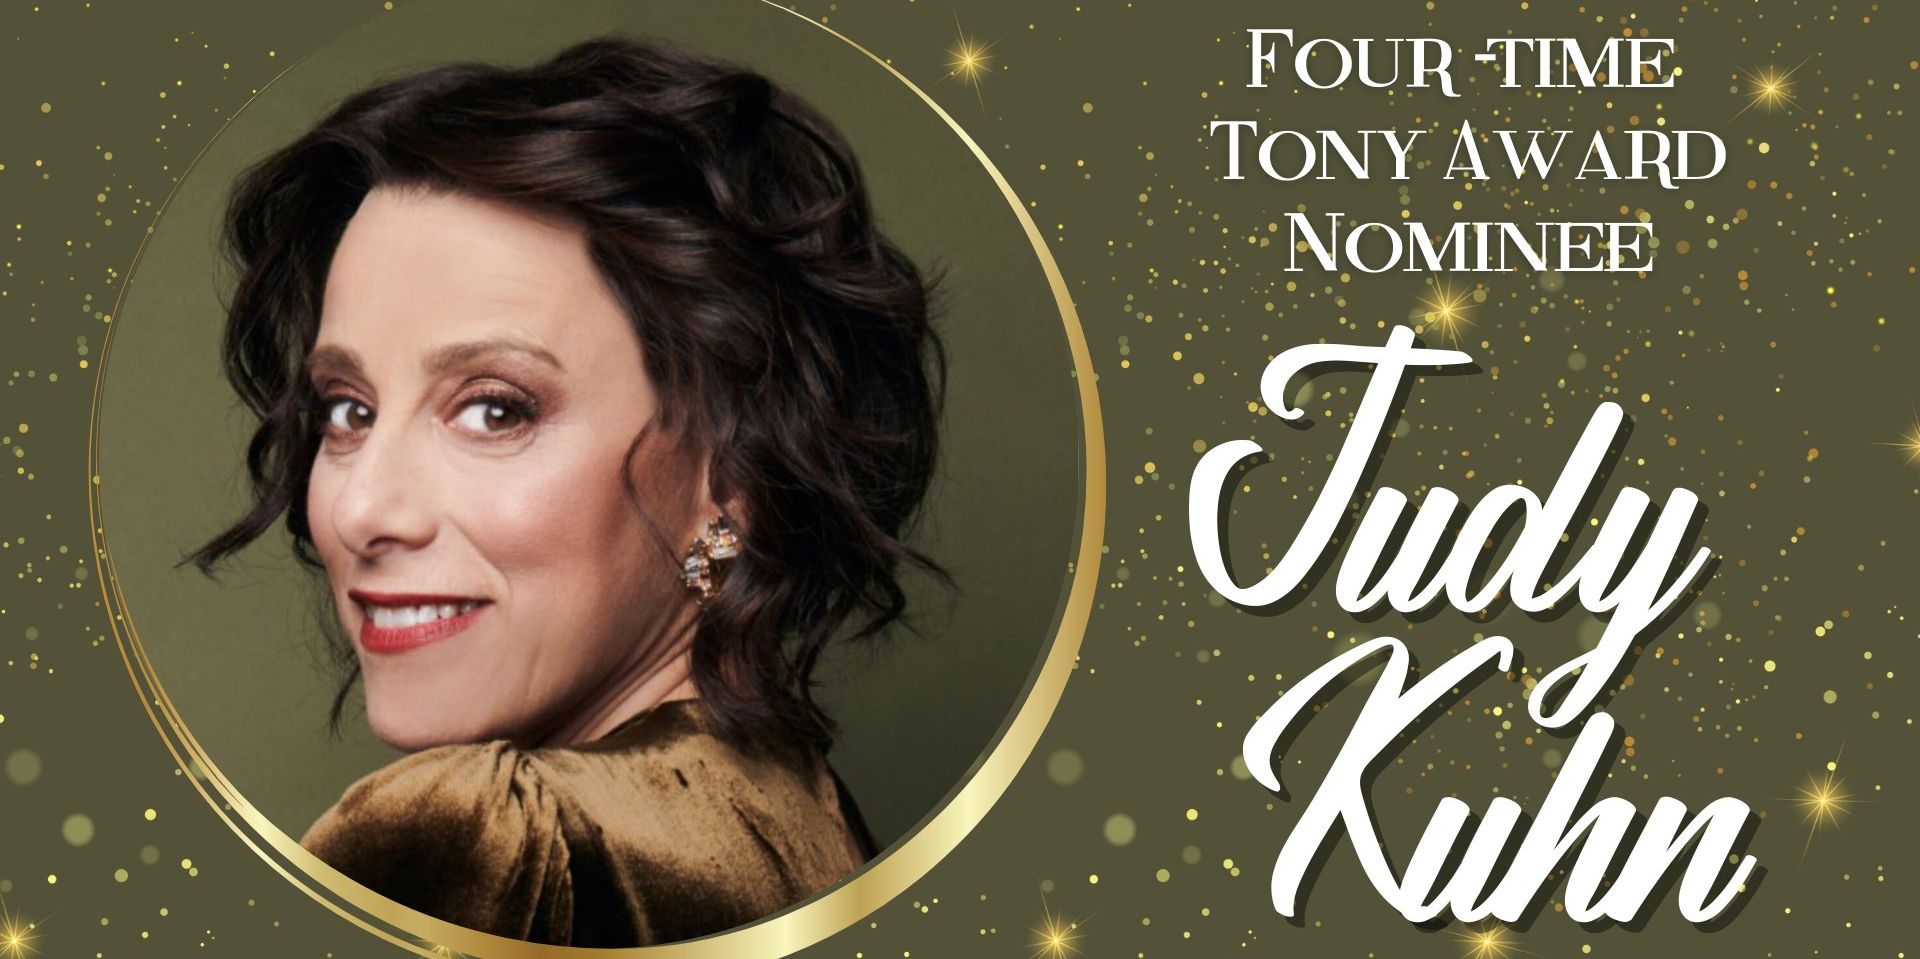 Four-Time Tony Award Nominee Judy Kuhn promotional image